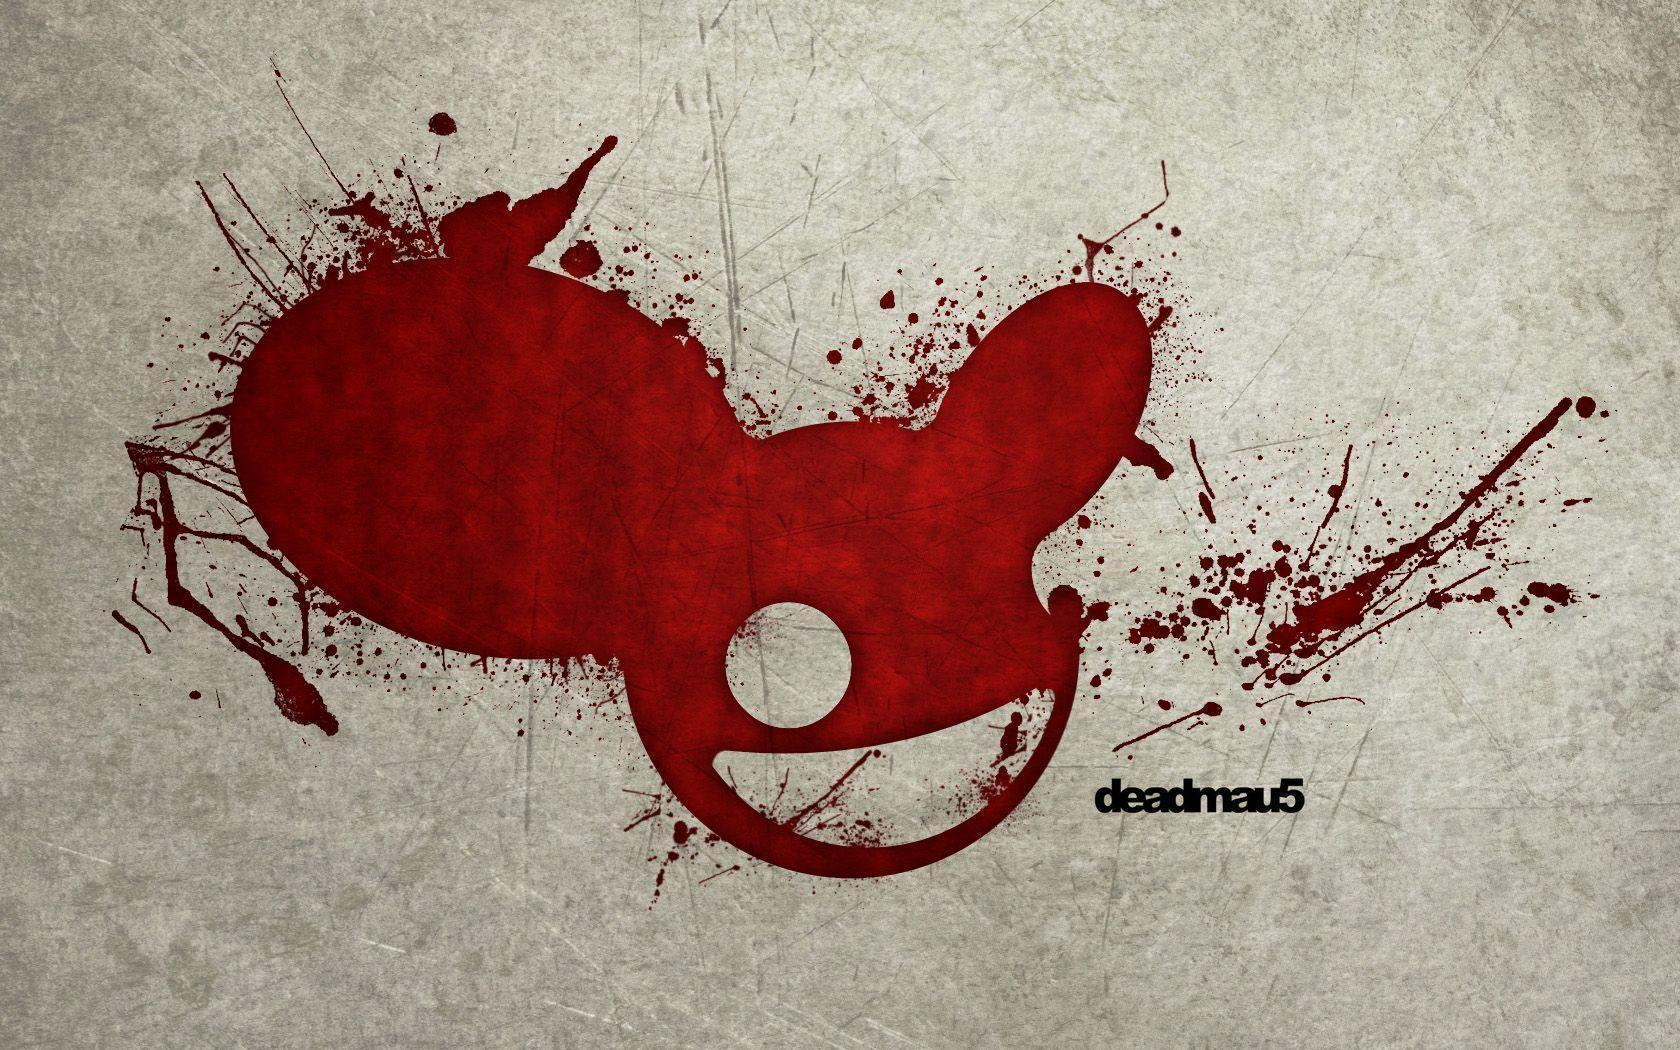 Deadmau5 Wallpaper HD. Full HD Picture